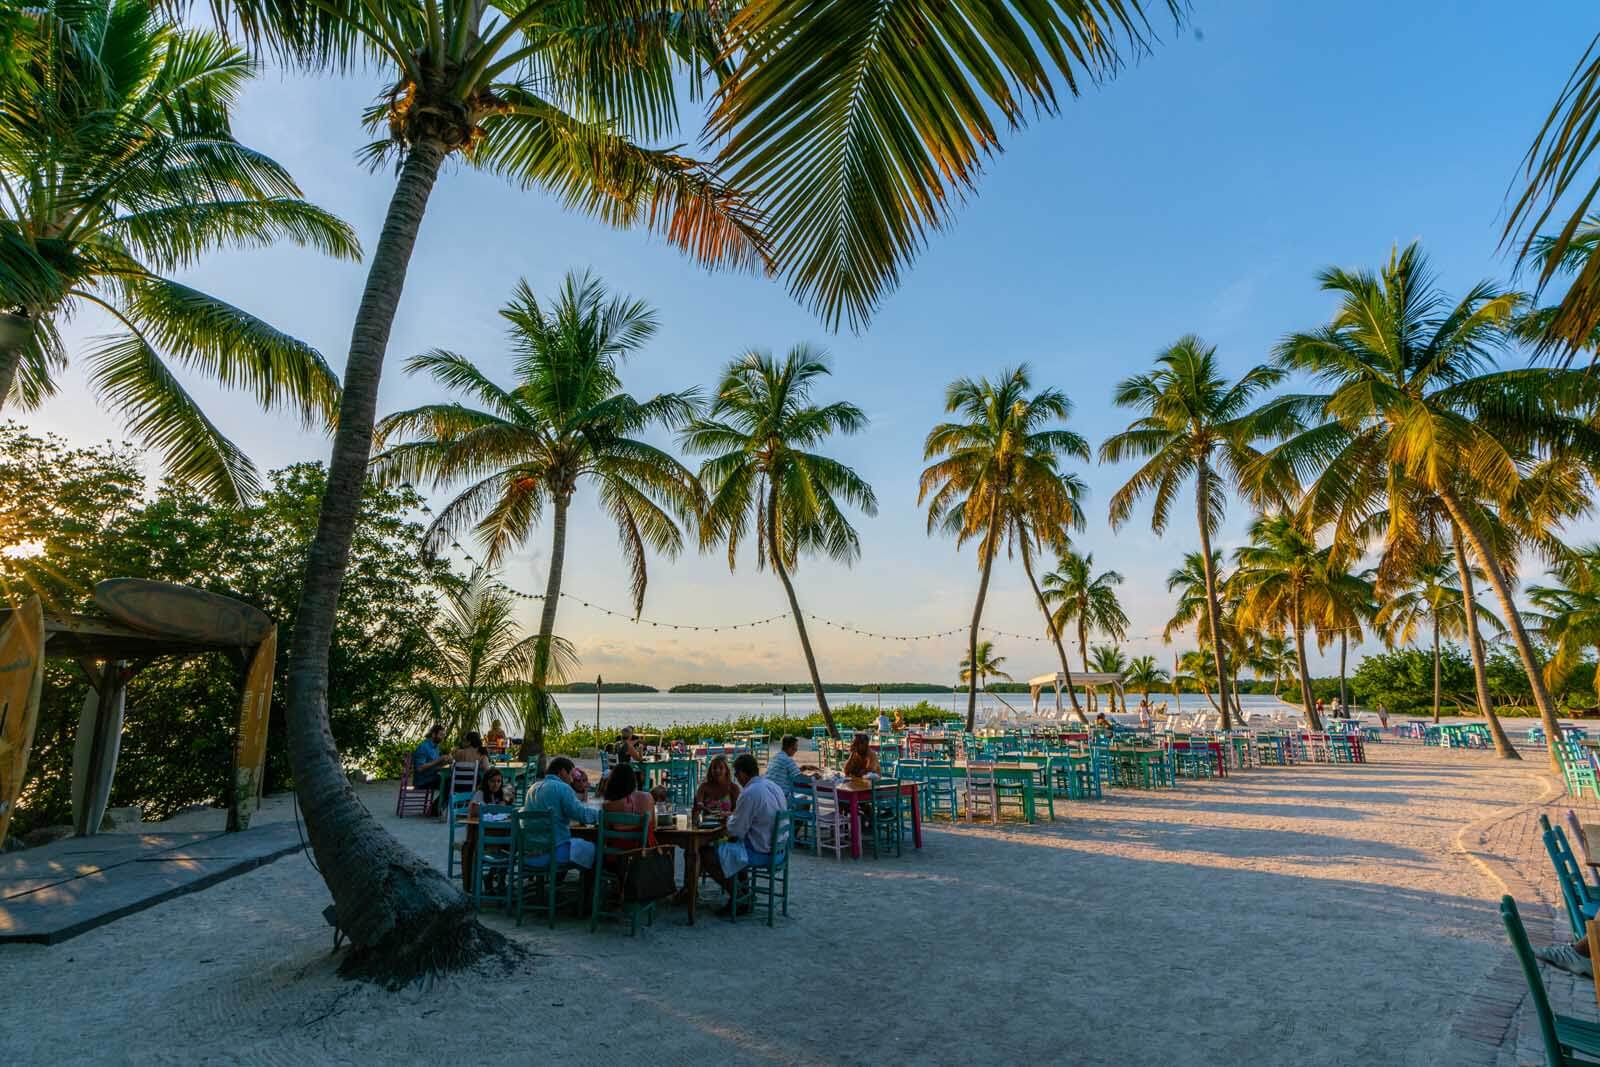 Dining at Morada Bay Beach Cafe in the Florida Keys